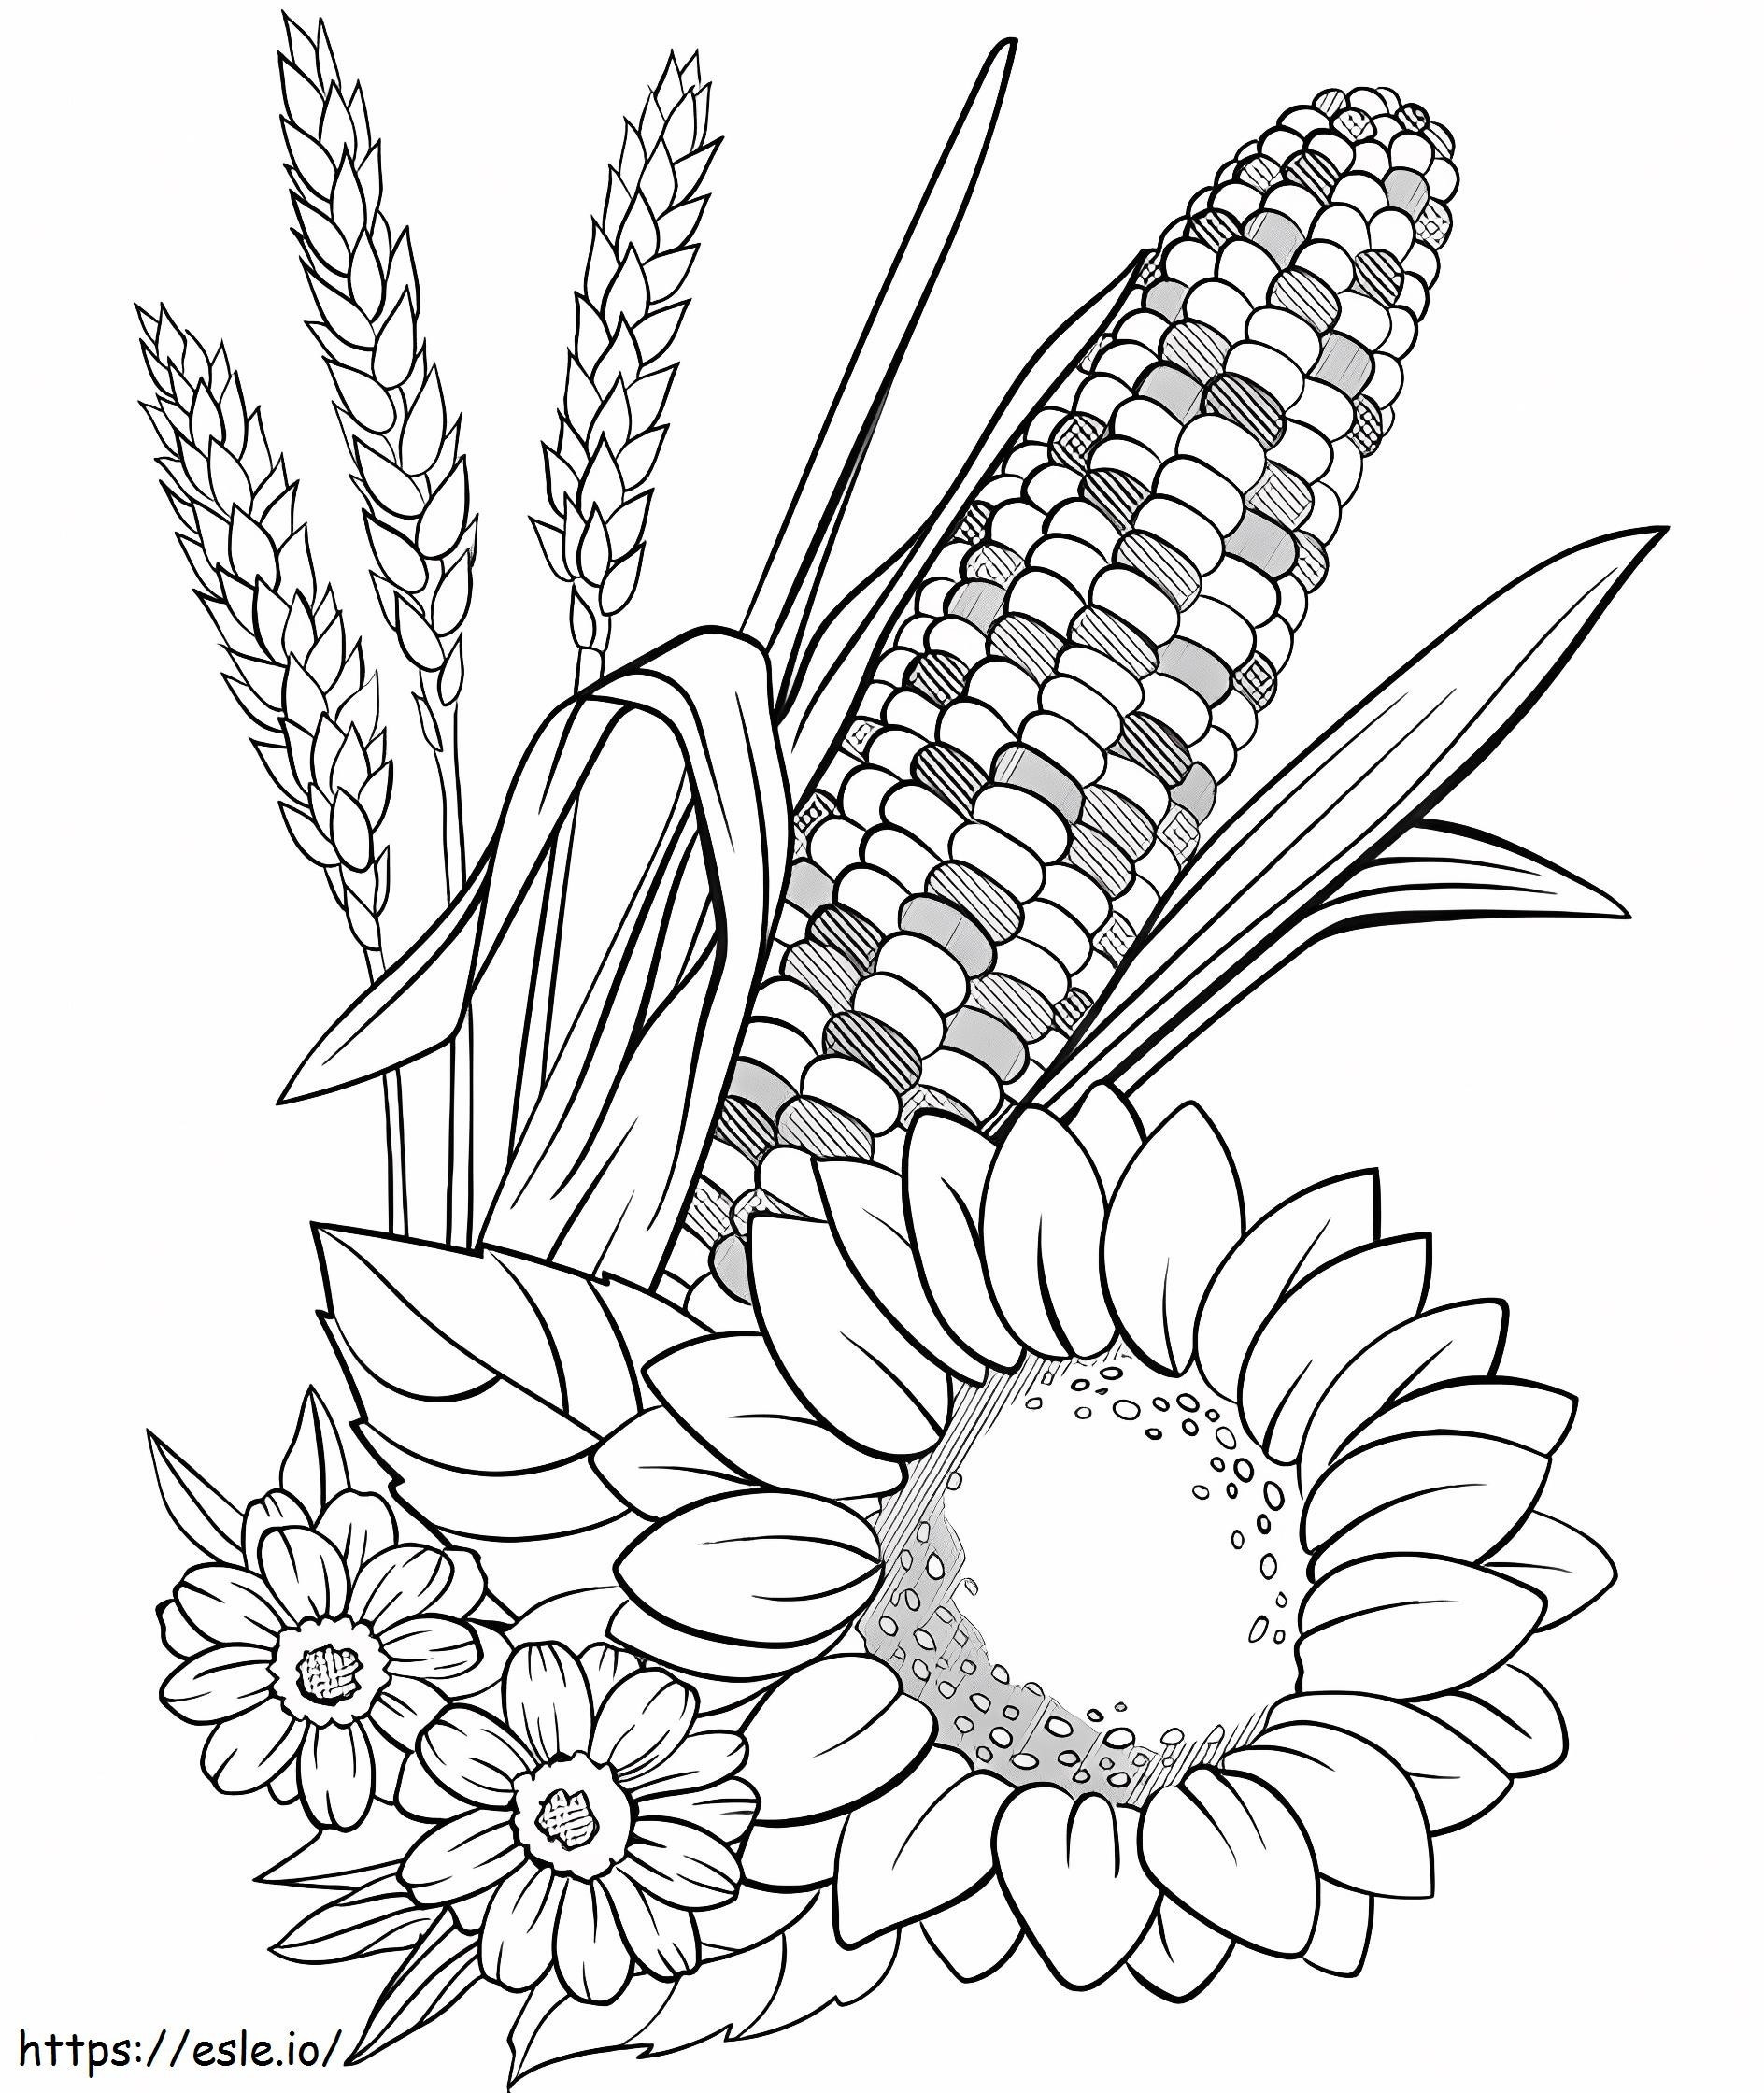 Kukorica és Virág kifestő